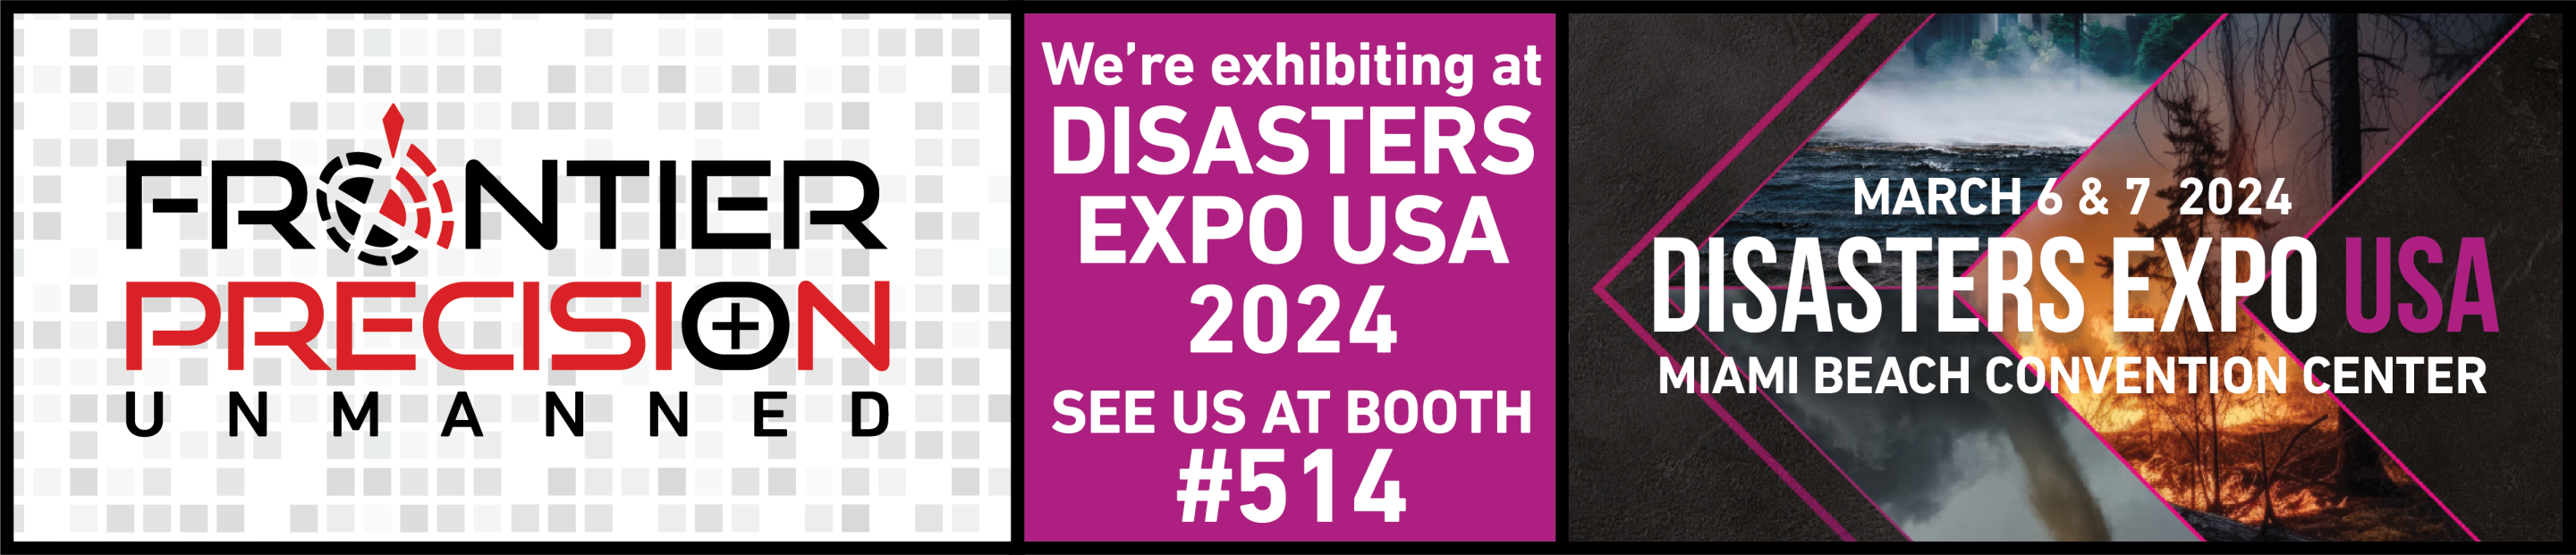 2024 Disasters Expo USA